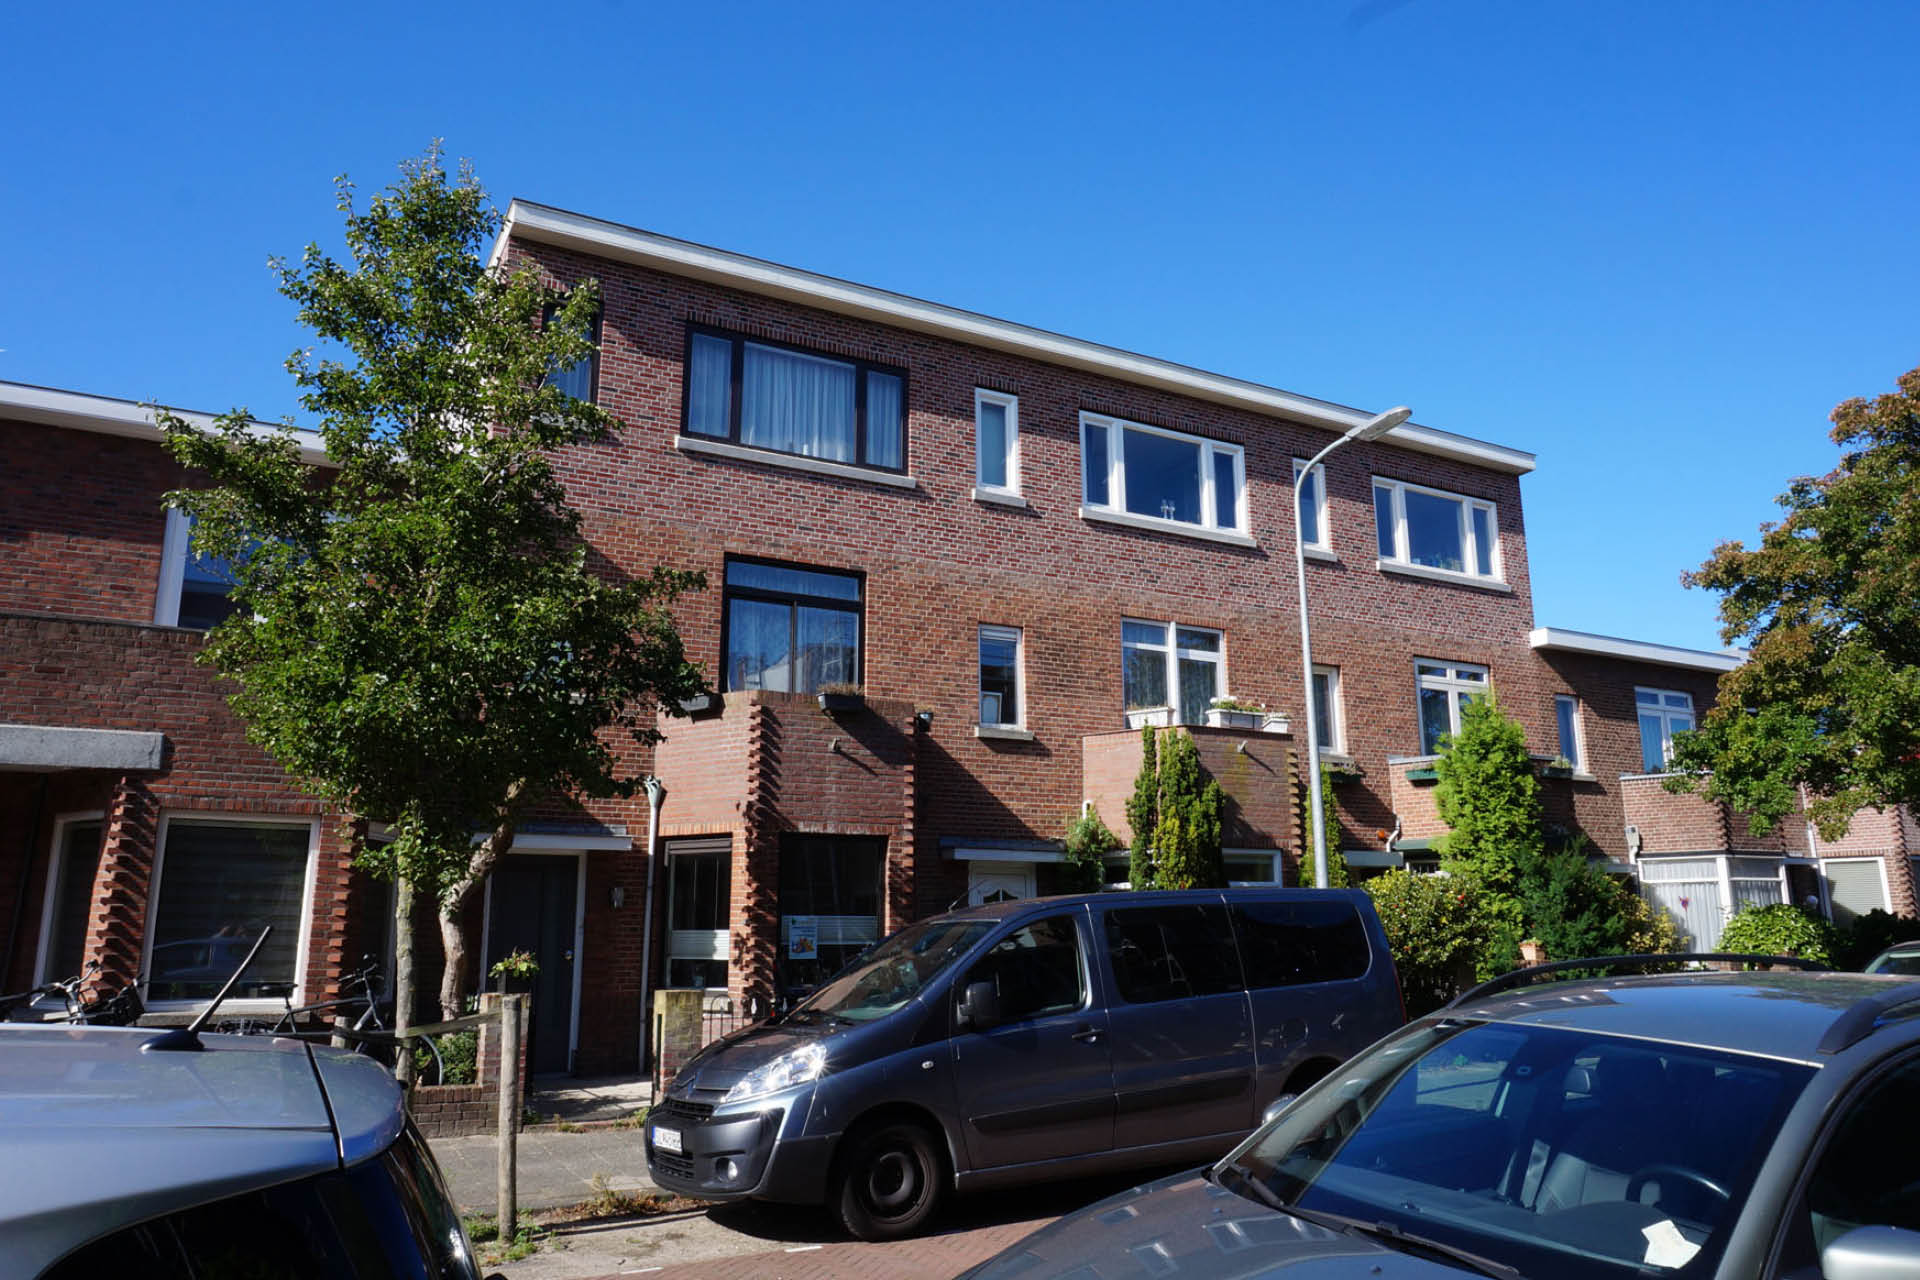 Fuchsiastraat, Kamillestraat & Hyacinthweg, Den Haag